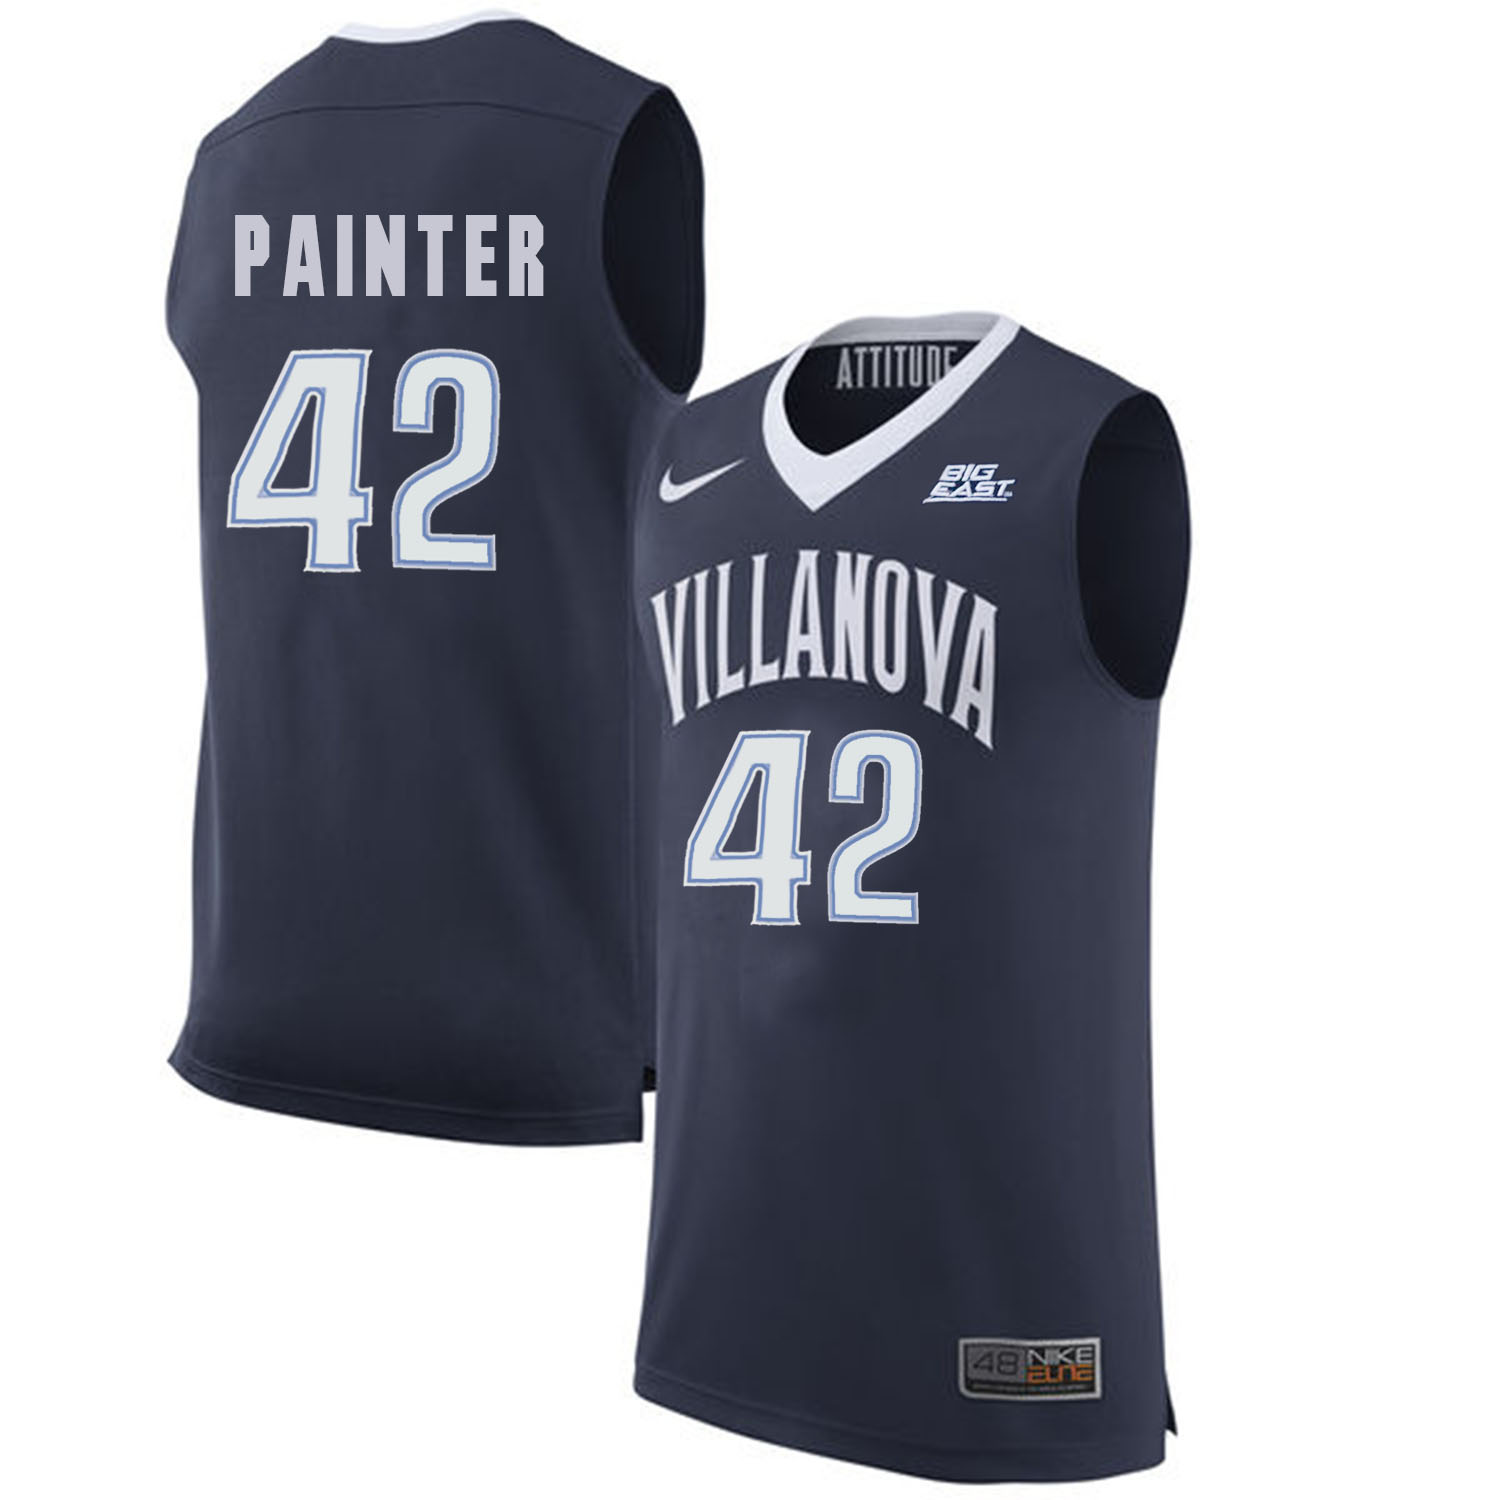 Villanova Wildcats 42 Dylan Painter Navy College Basketball Elite Jersey